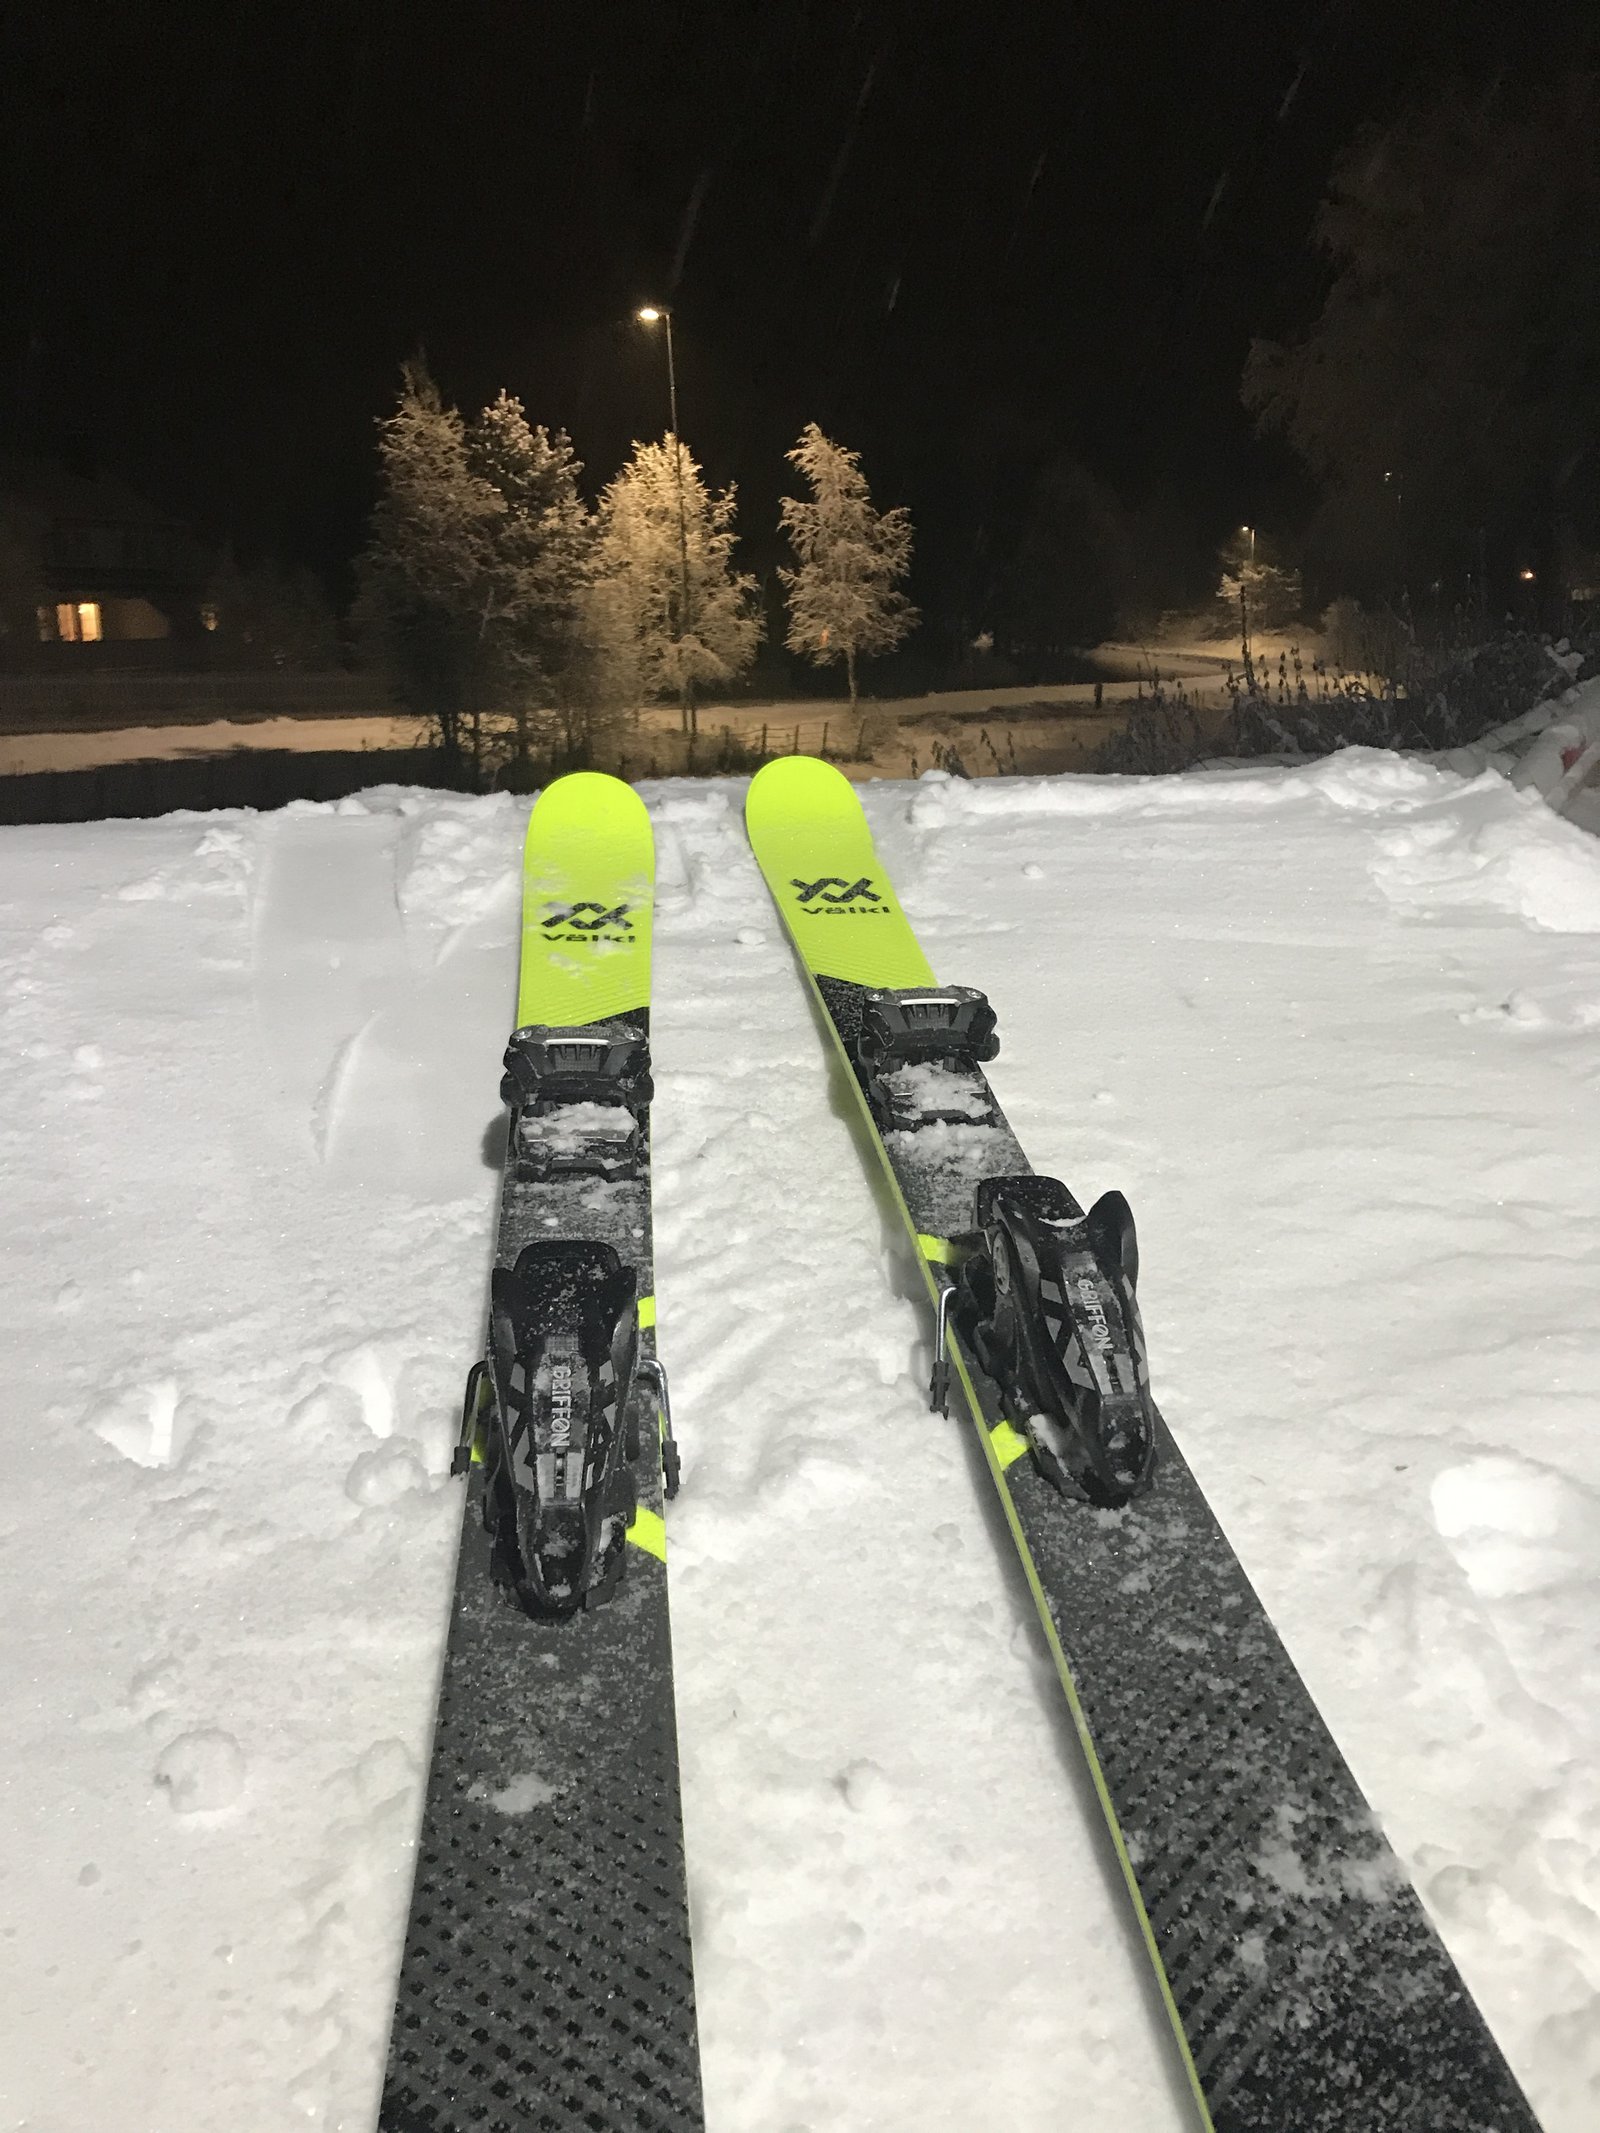 New season, new skis 